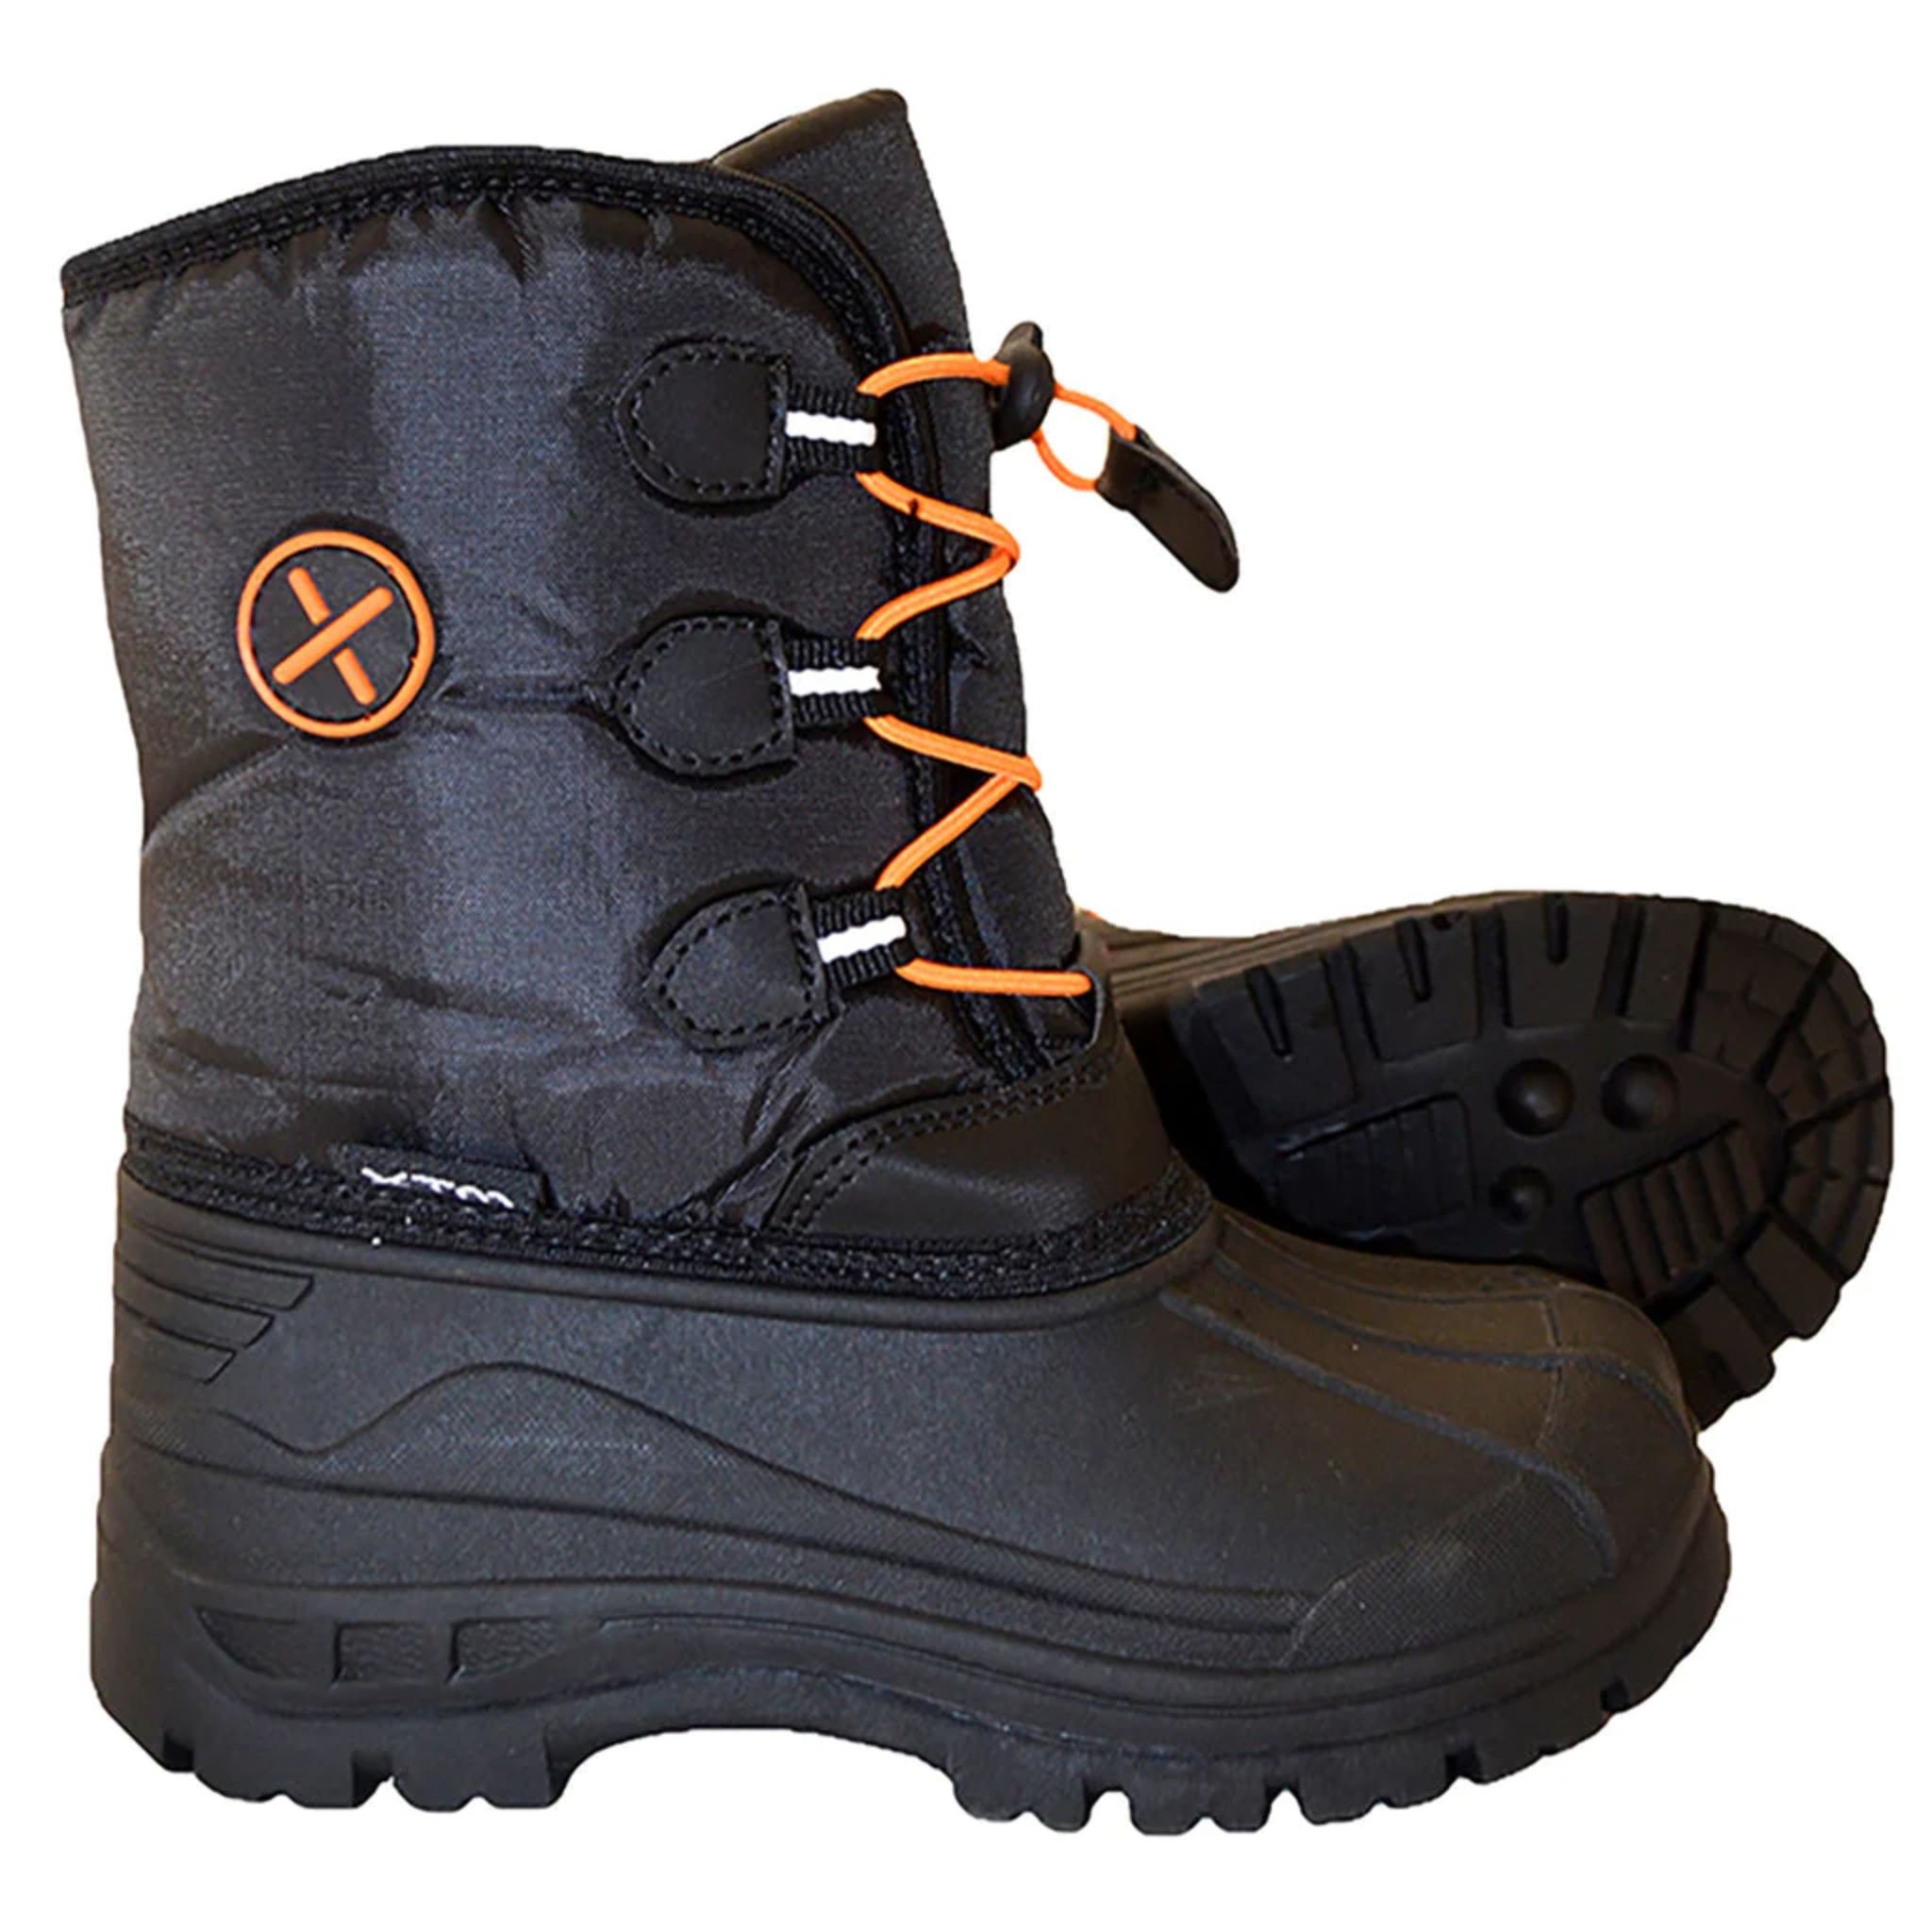 Xtm Rocket Kids Boot - Black Orange